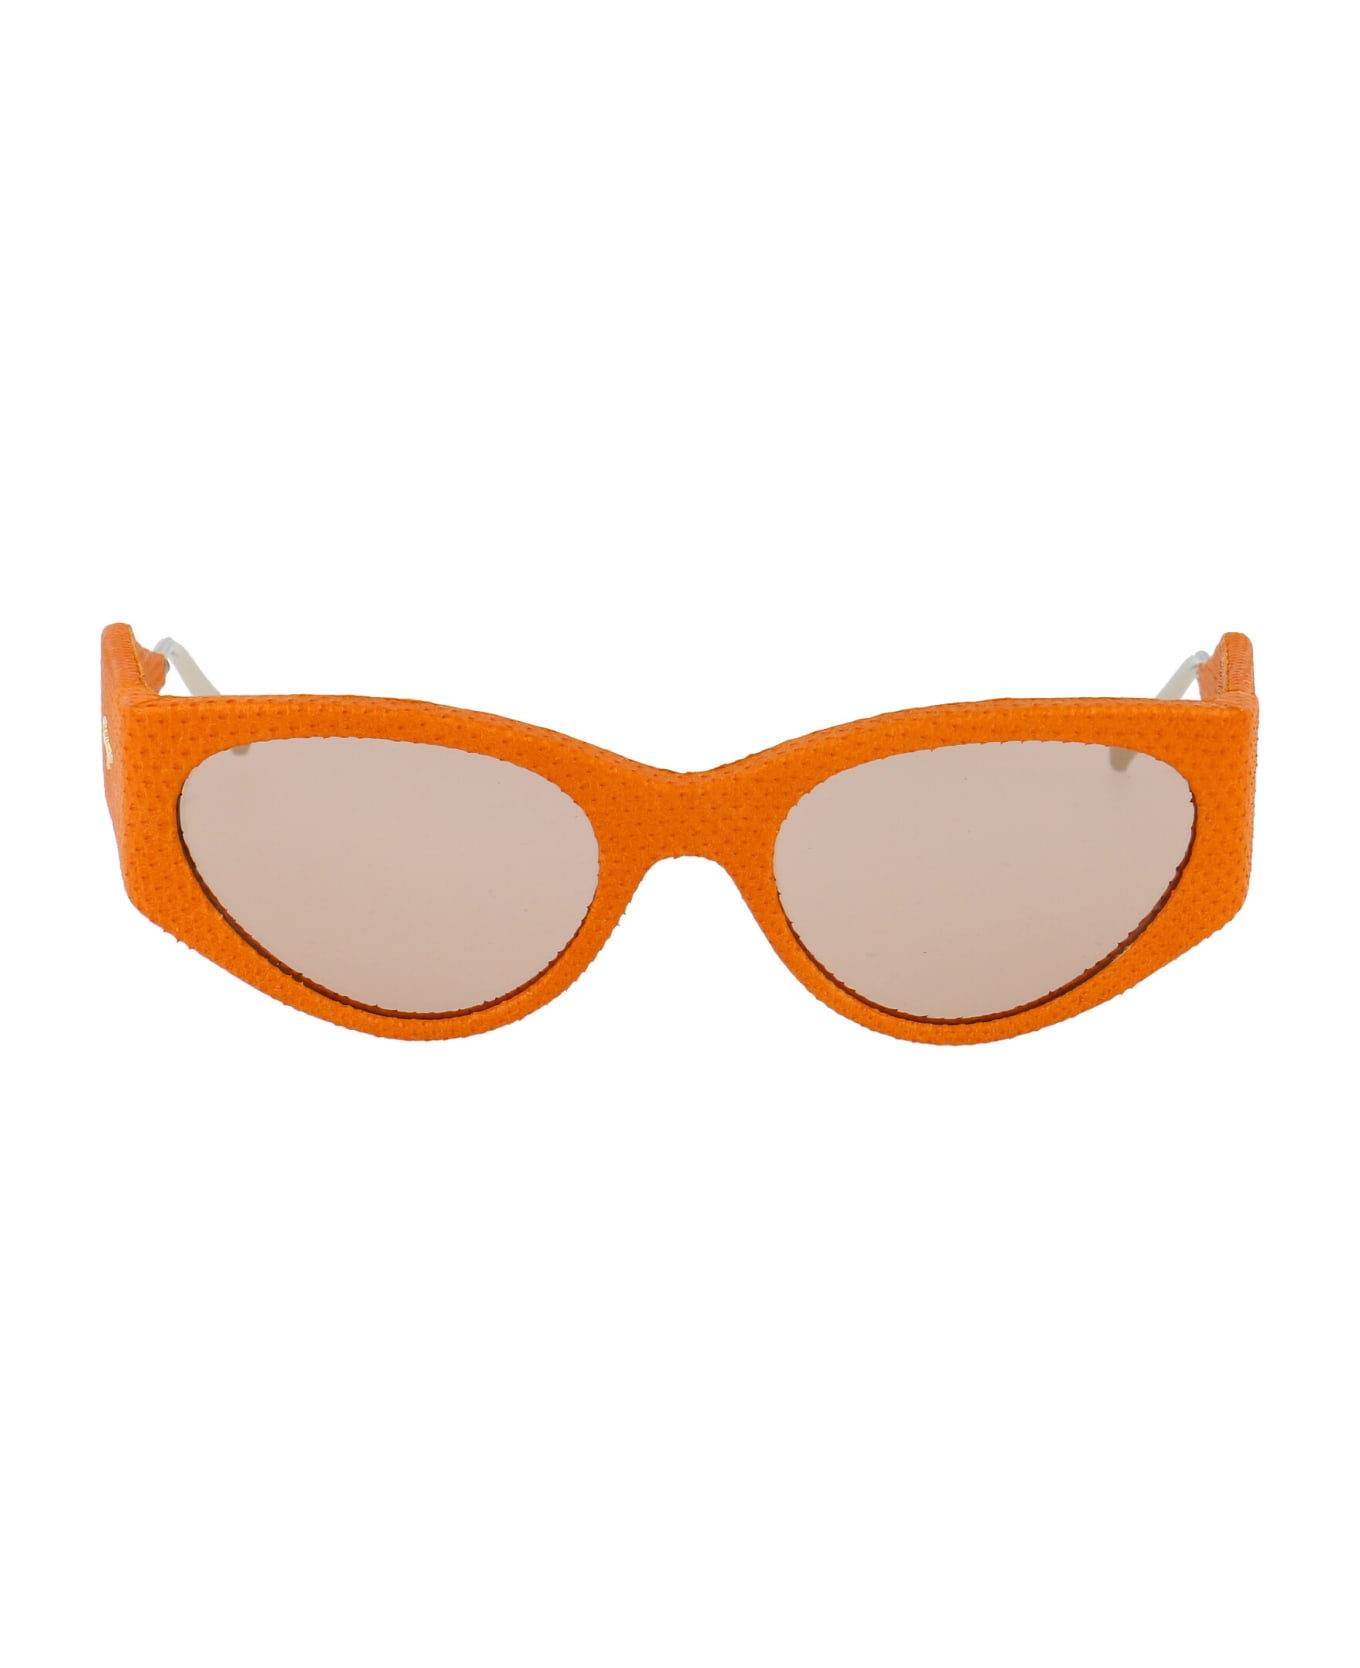 Salvatore Ferragamo Eyewear Sf950sl Sunglasses - 712 GOLDEN KARUNG